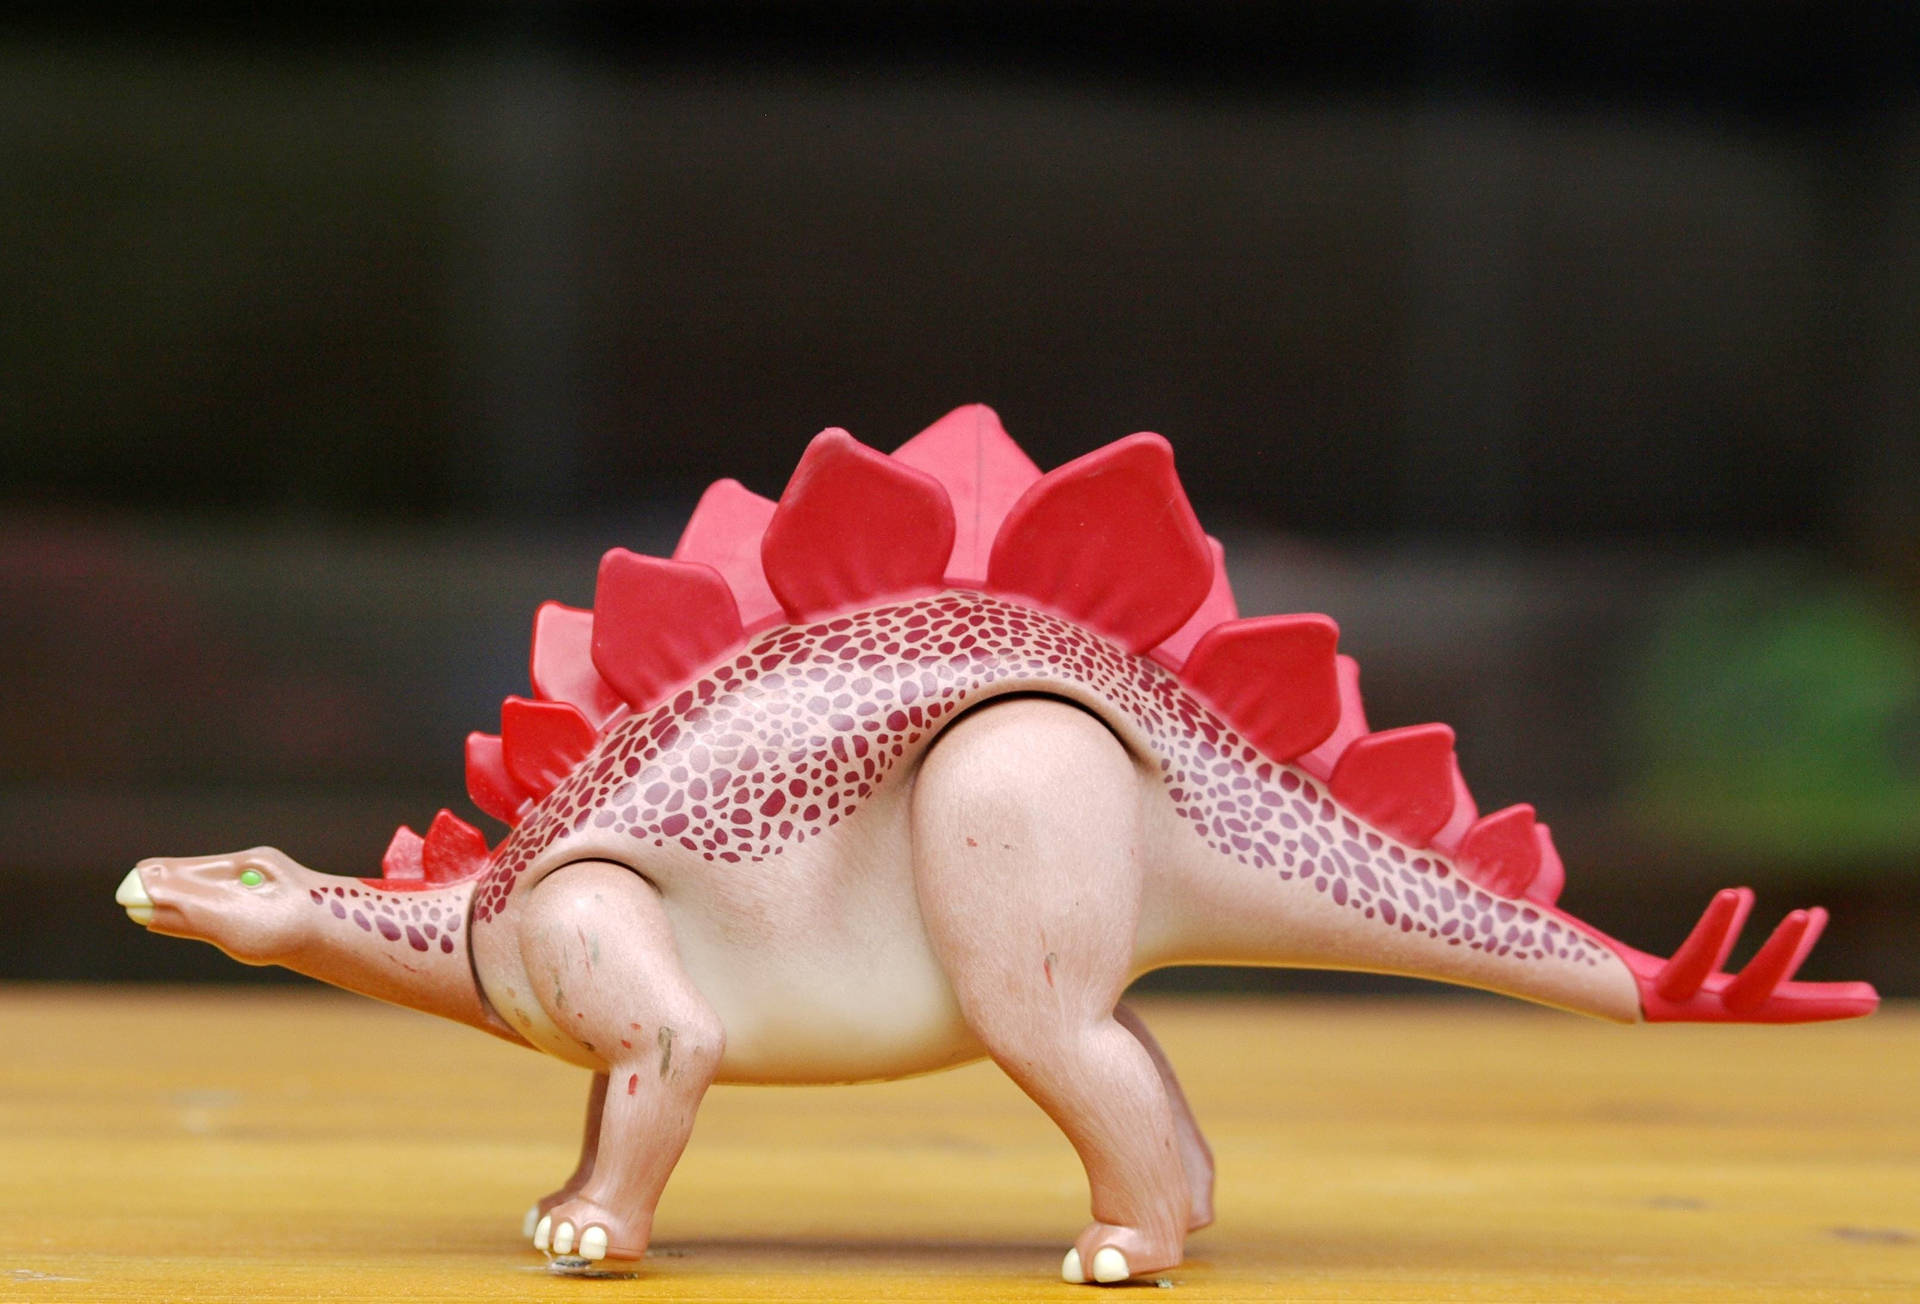 Cute Pink Dinosaur Stegosaurus Toy Background